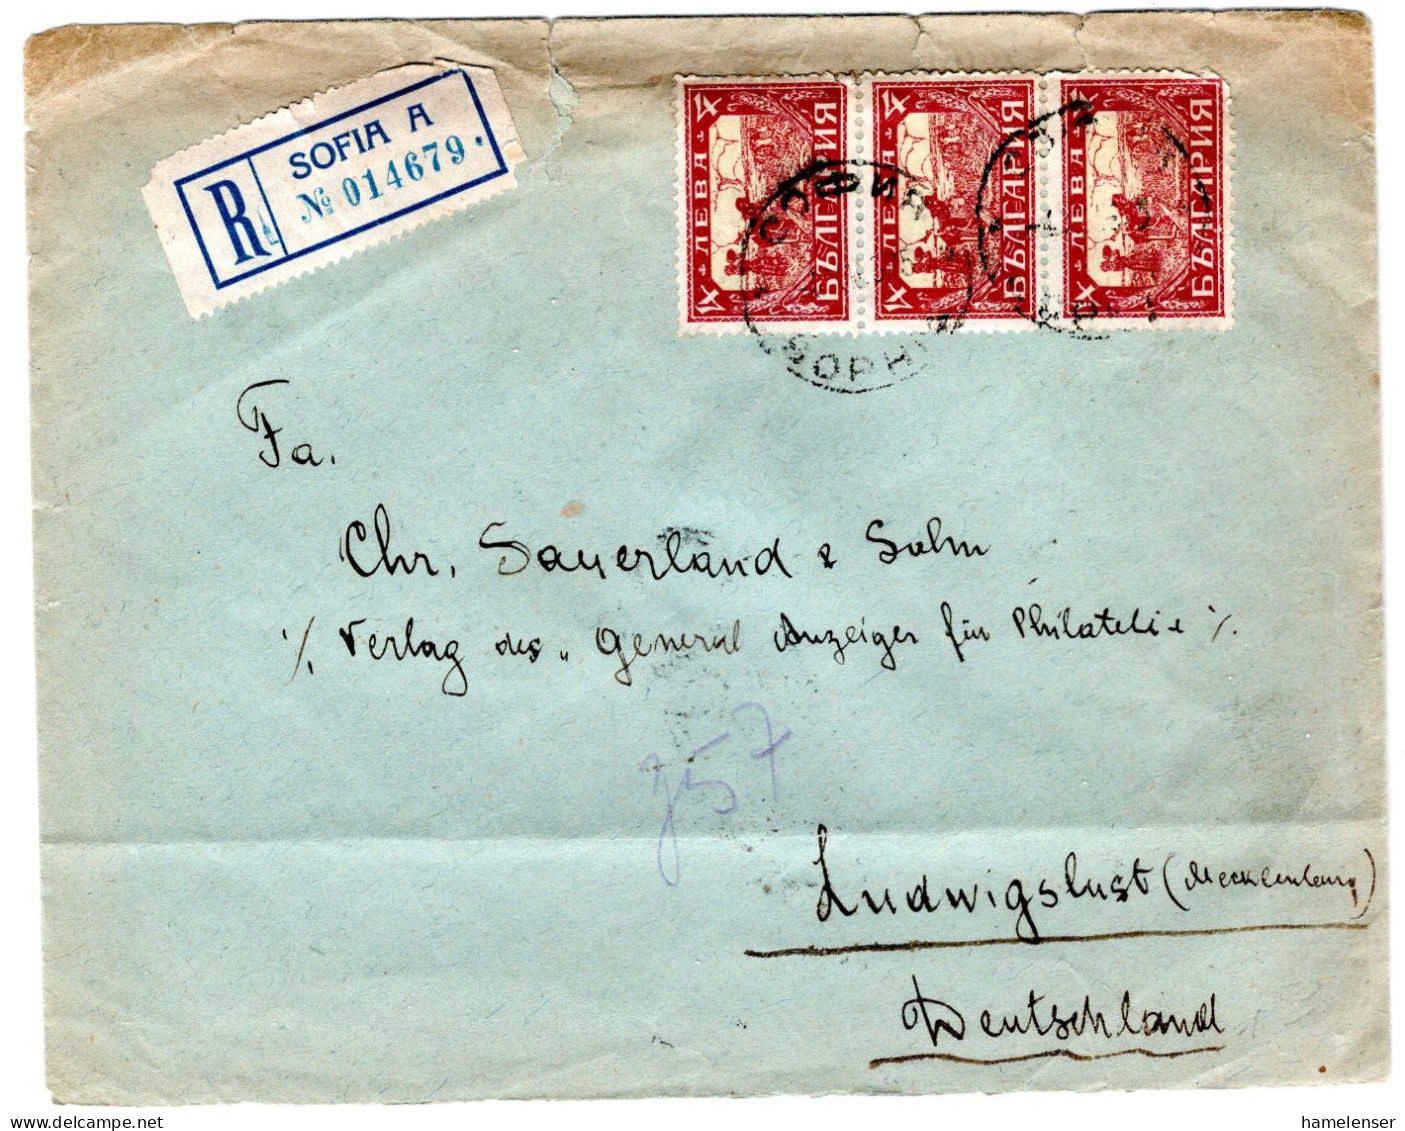 L64883 - Bulgarien - 1925 - 3@4L Landwirtschaft A R-Bf SOFIA -> LUDWIGSLUST (Deutschland), Kl Mgl - Storia Postale